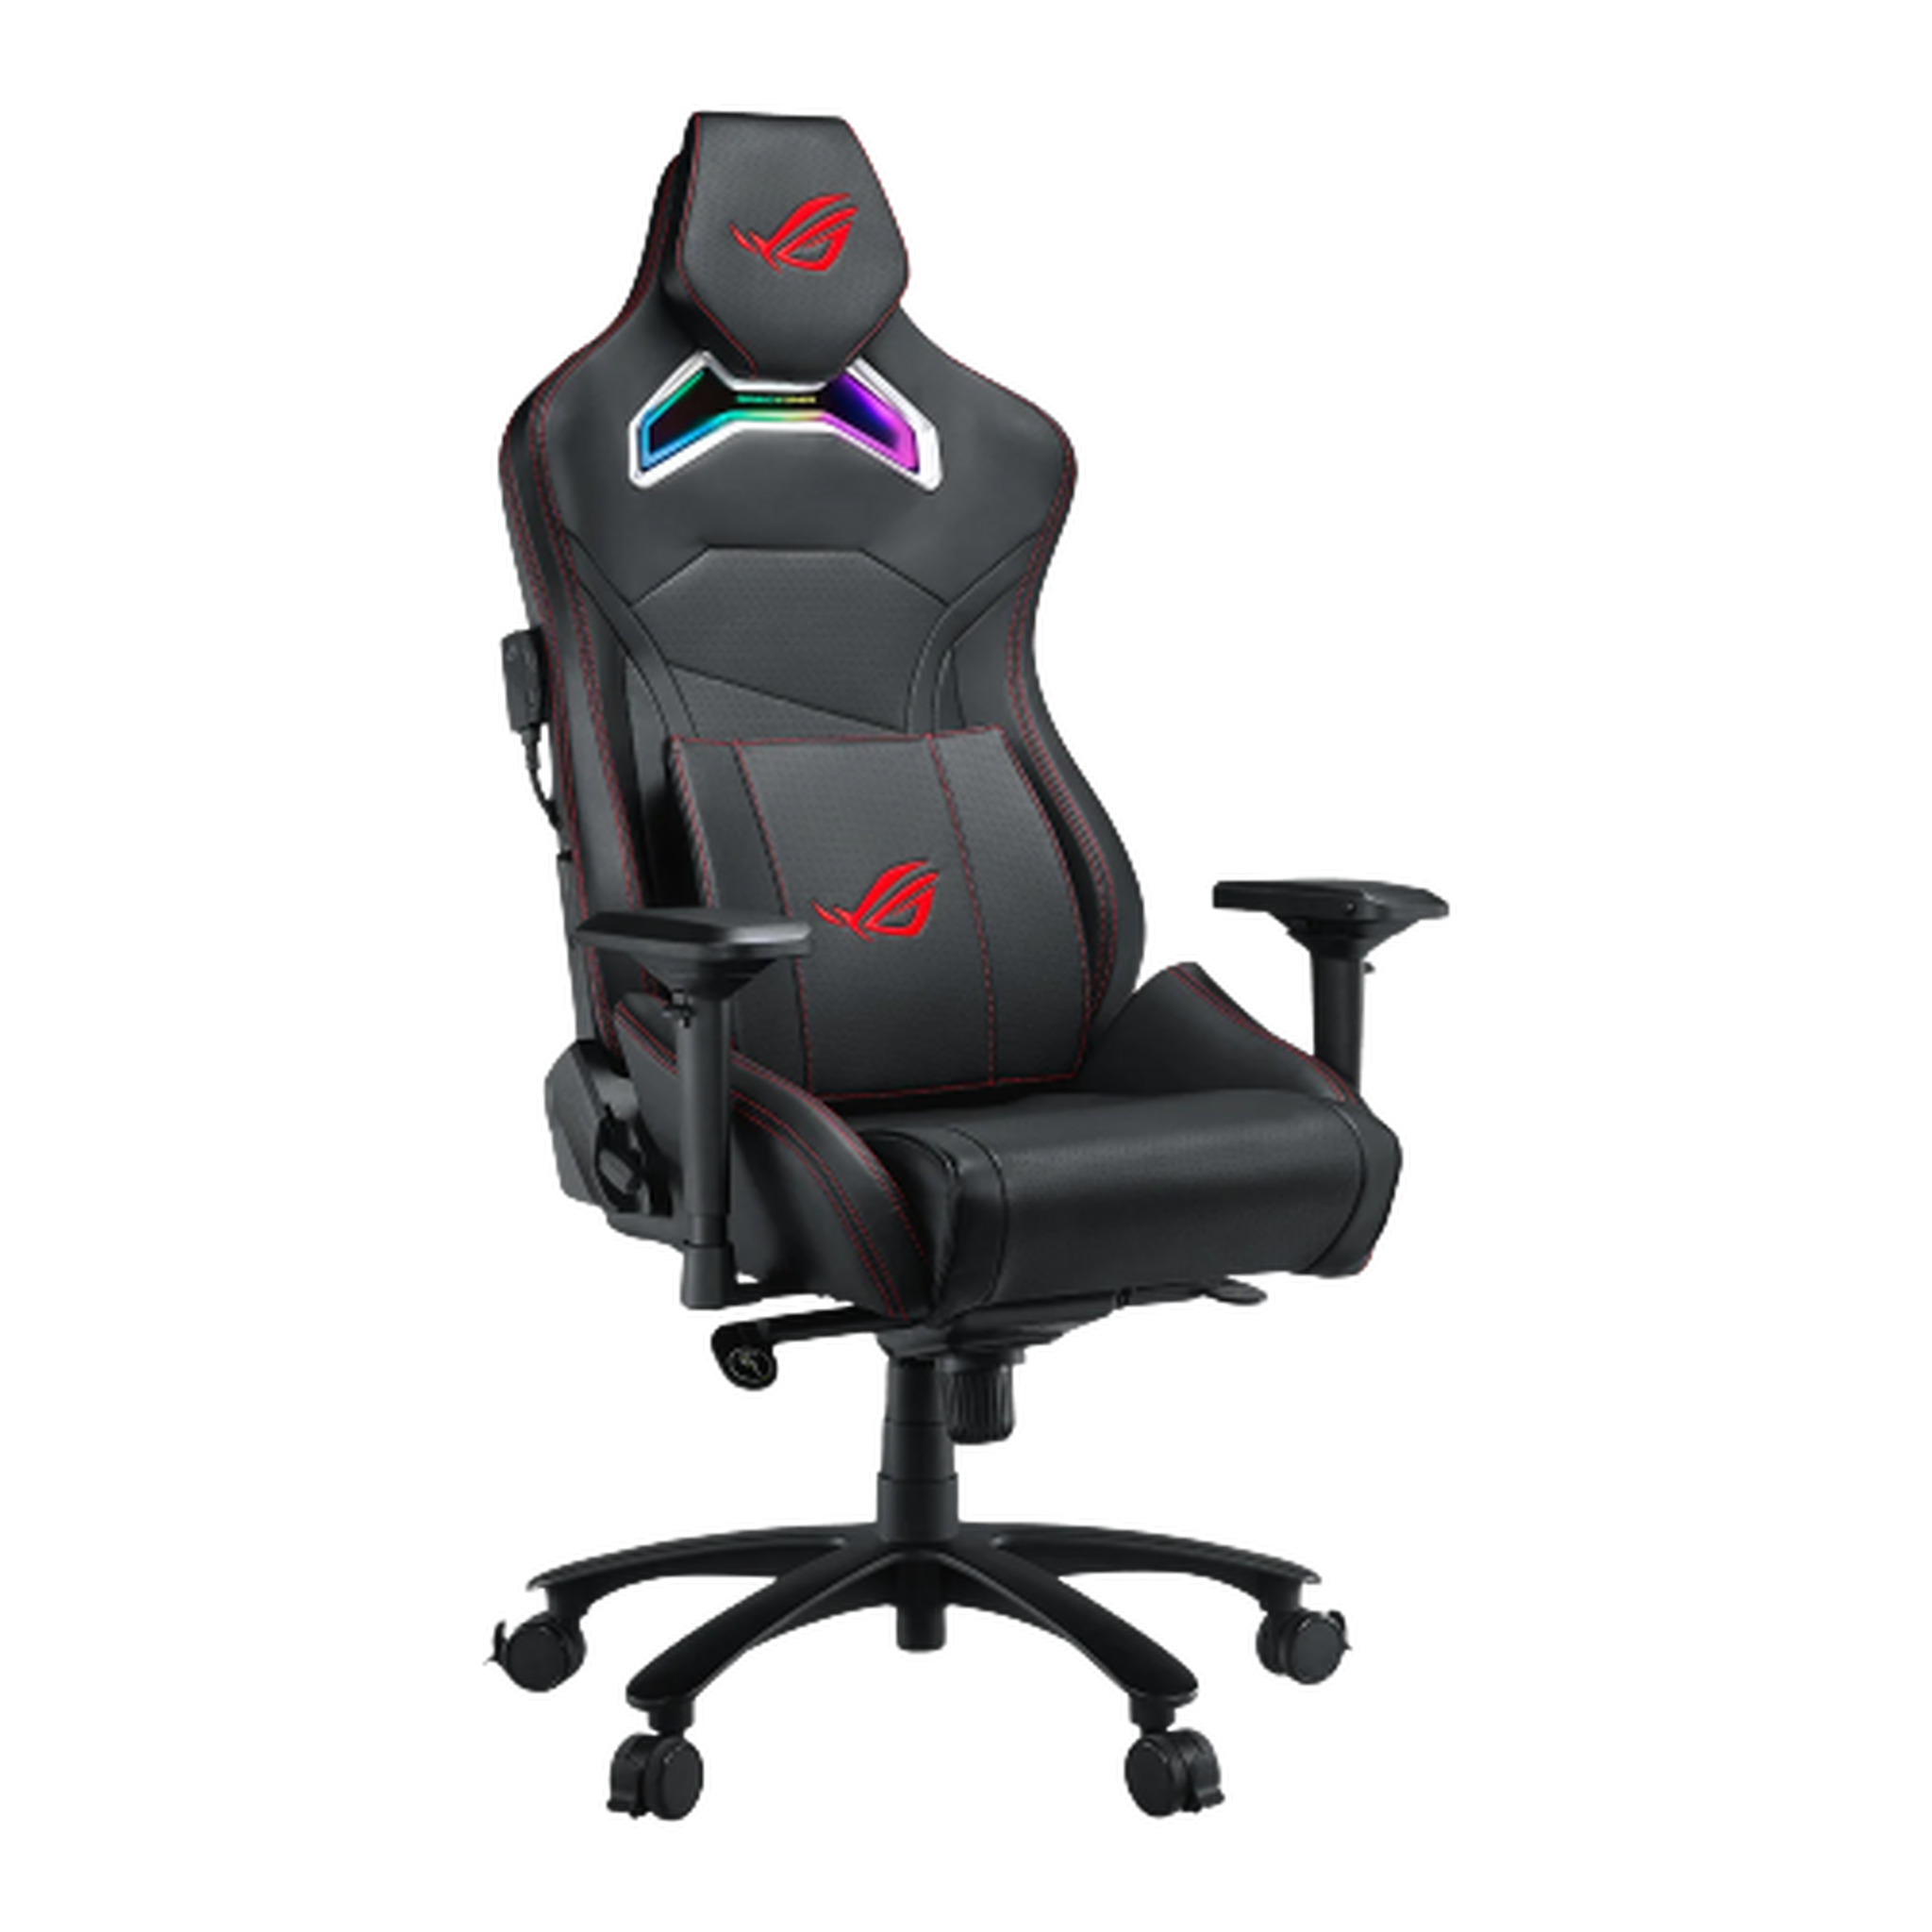 Asus ROG Chariot RGB Gaming Chair - Black